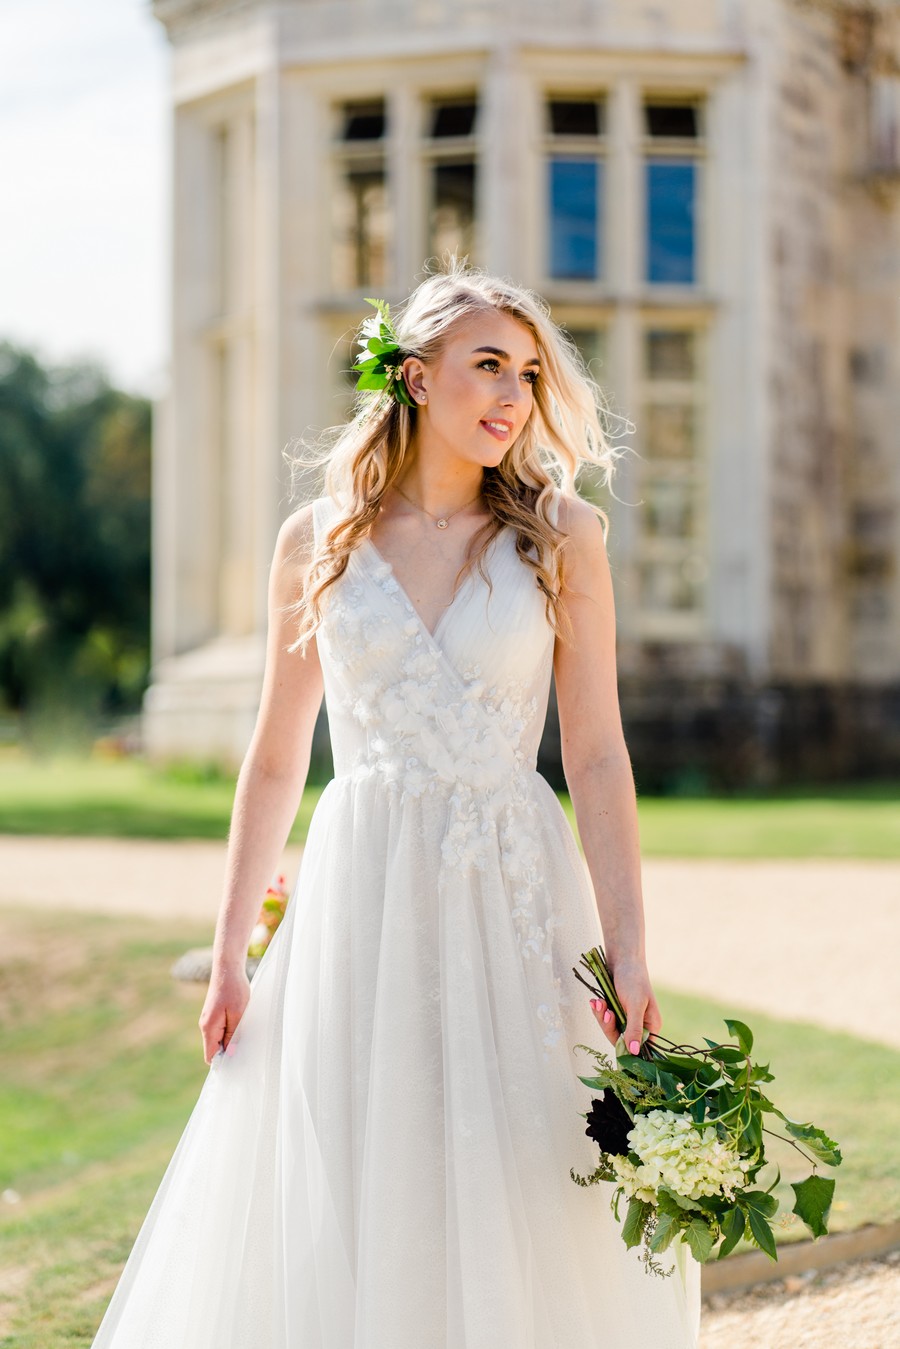 Highcliffe Castle wedding inspiration on the English Wedding Blog (33)